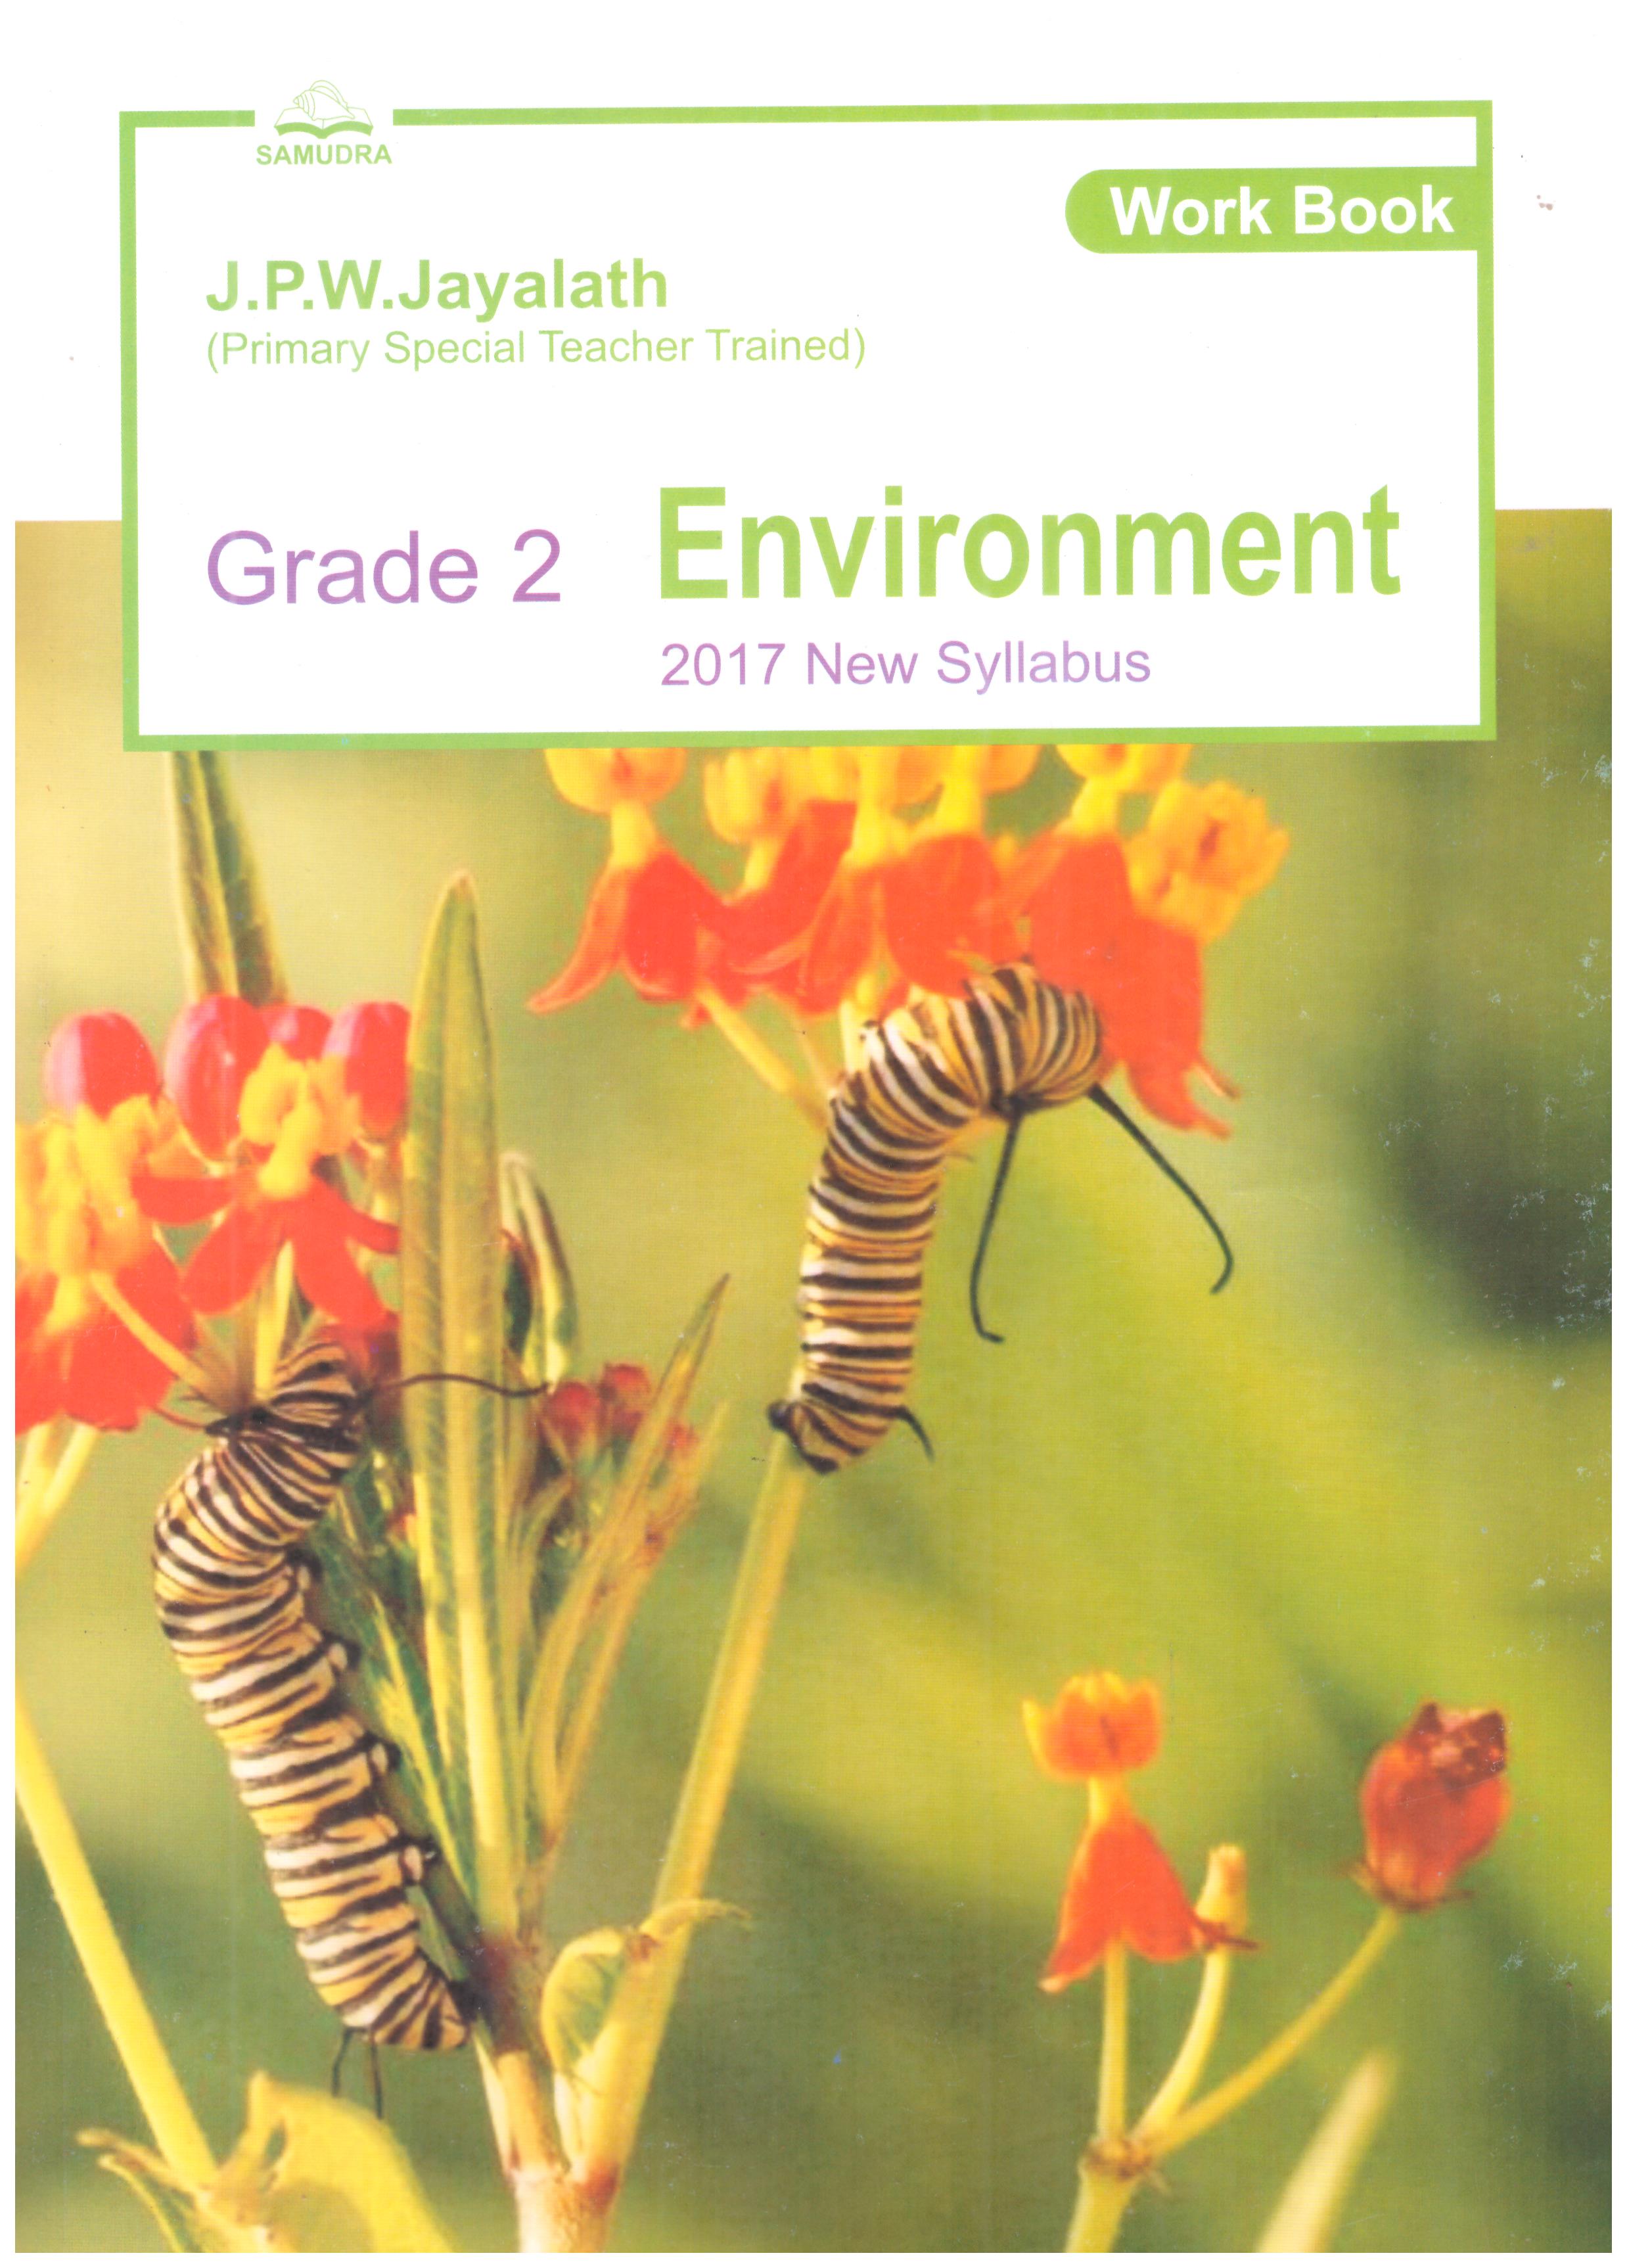 Samudra Grade 2 Environment work book (2017 New Syllabus)